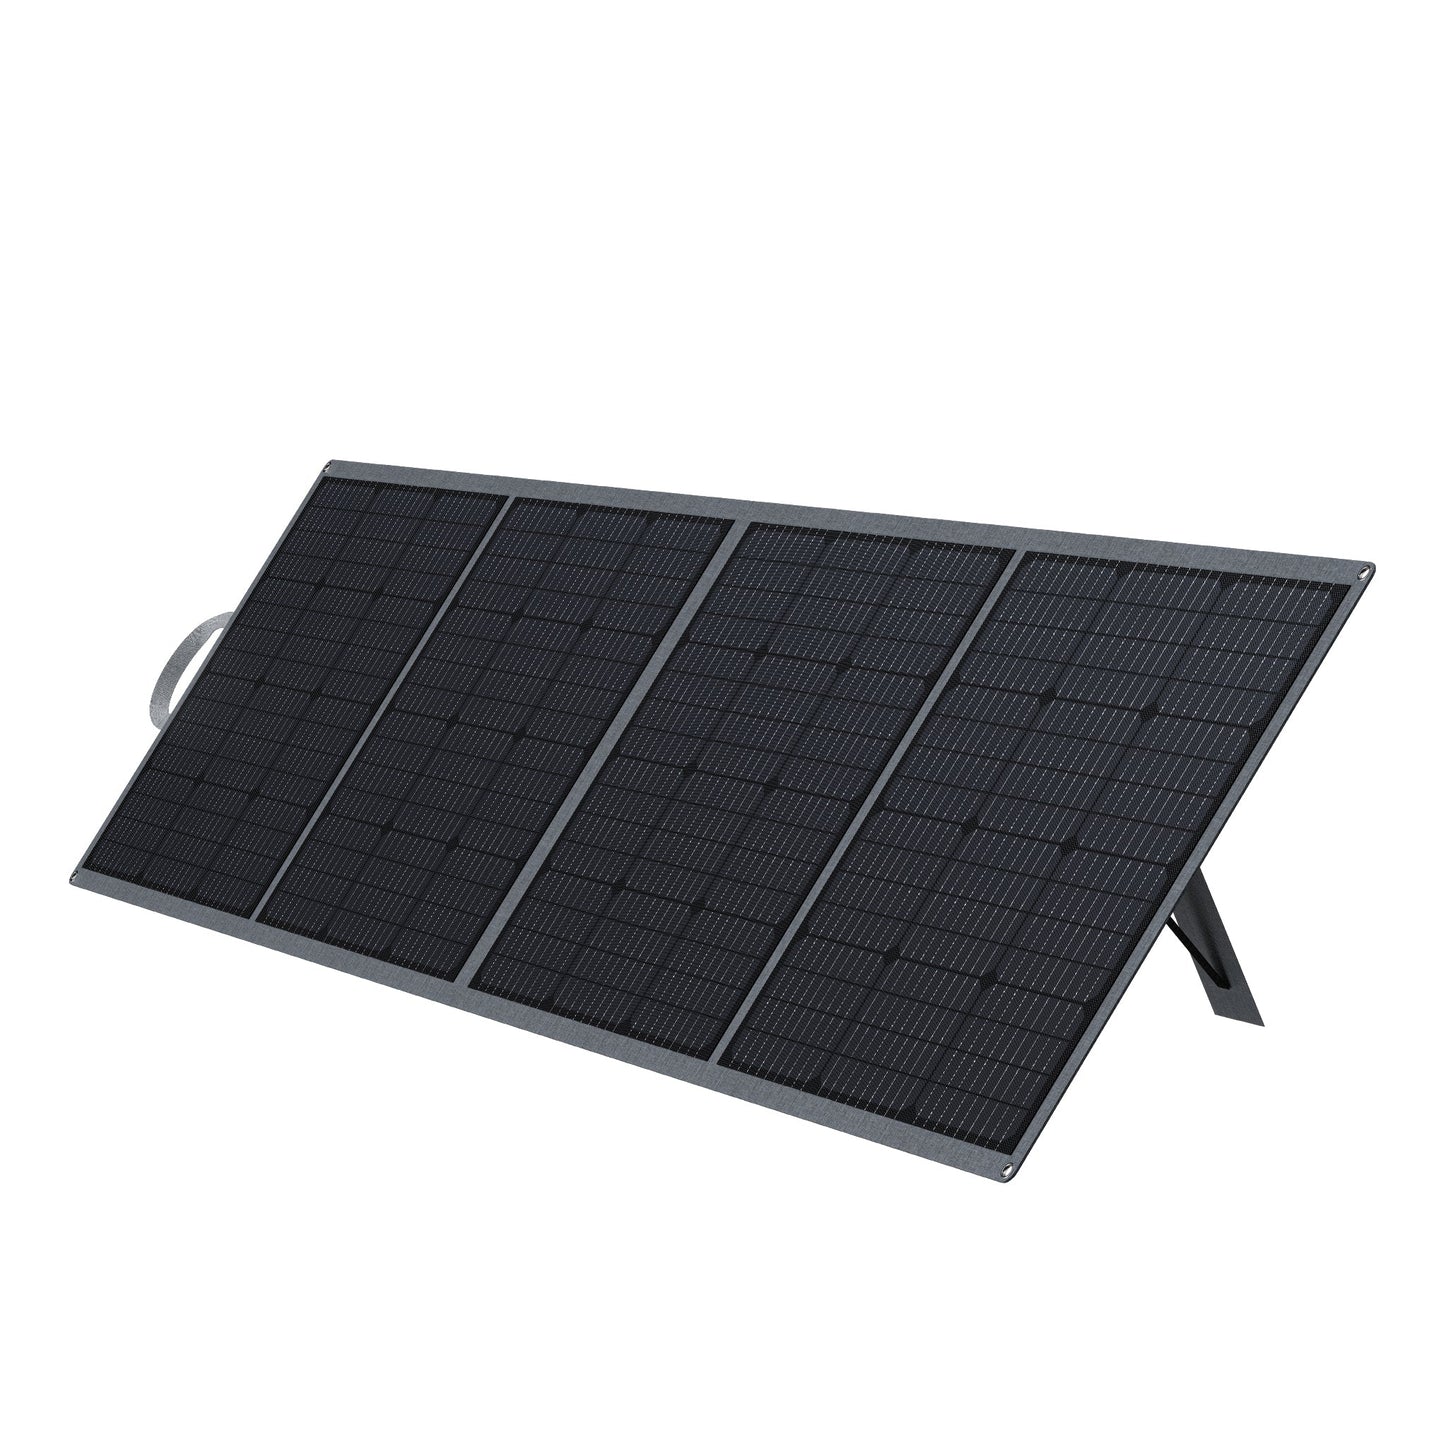 DaranEner SP200 Solar Panel | 200W